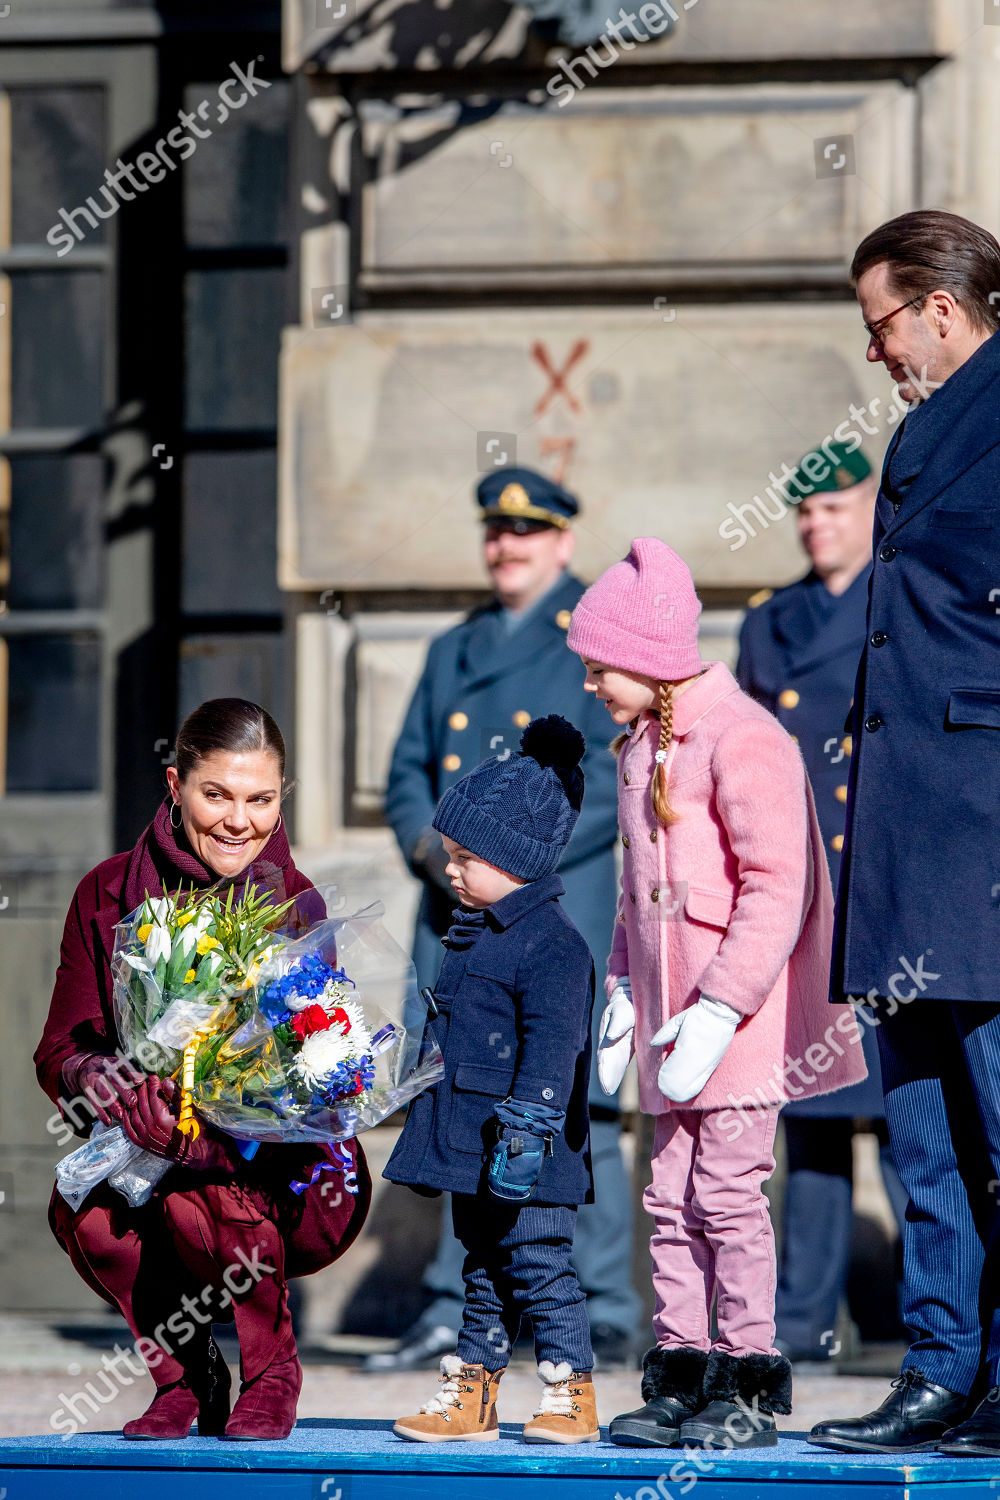 crown-princess-victoria-name-day-celebrations-stockholm-sweden-shutterstock-editorial-10151872f.jpg